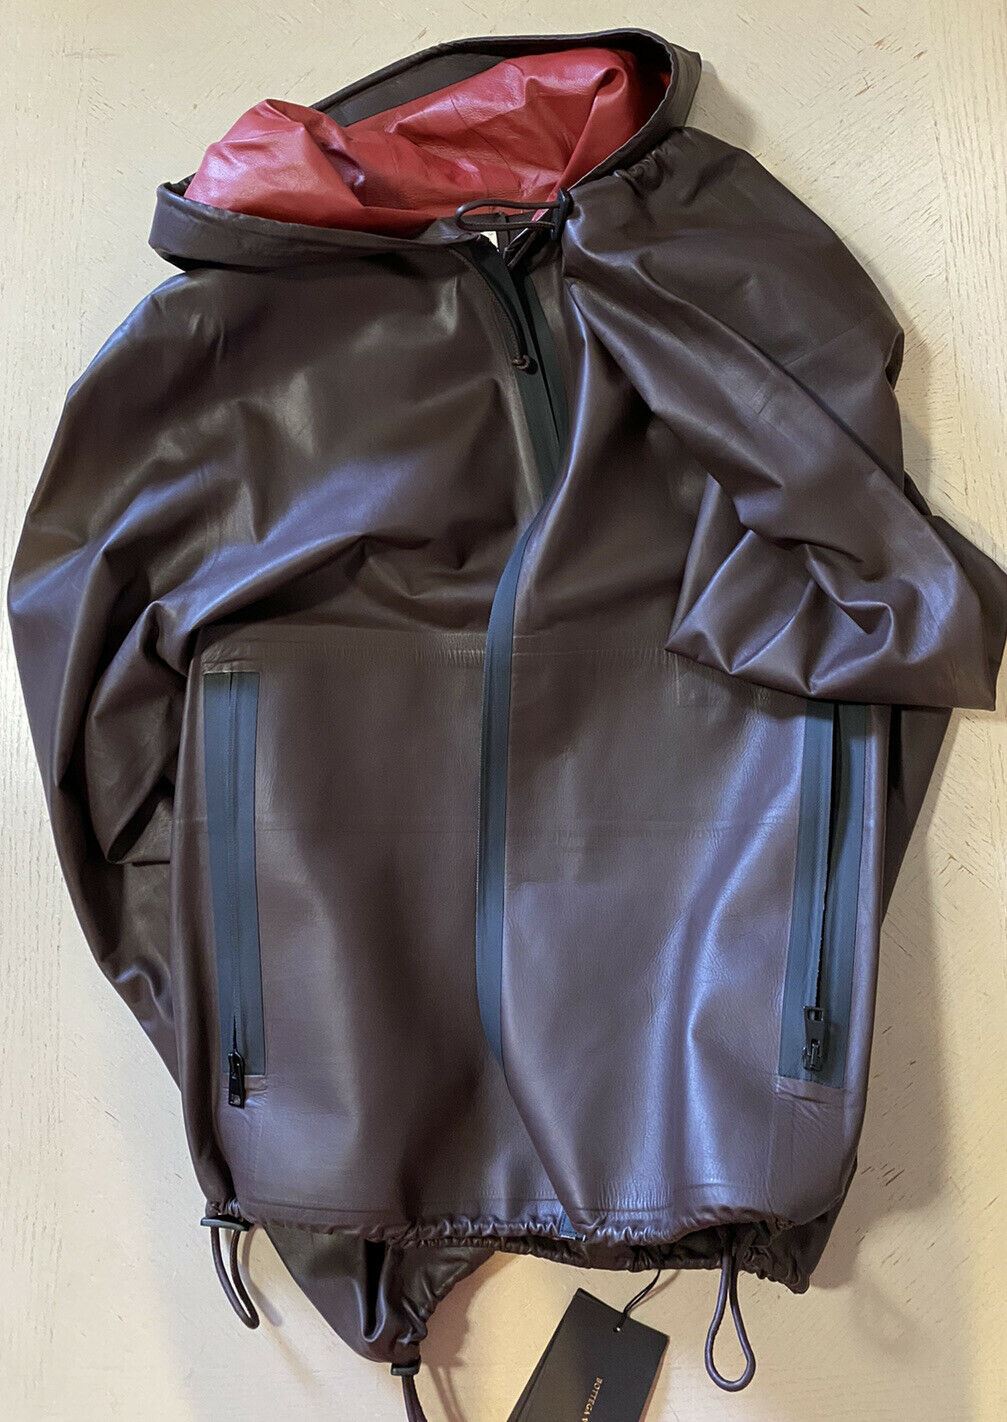 New $5950 Bottega Veneta Mens Leather Jacket Coat DK Brown 42 US ( 52 Eu ) Italy